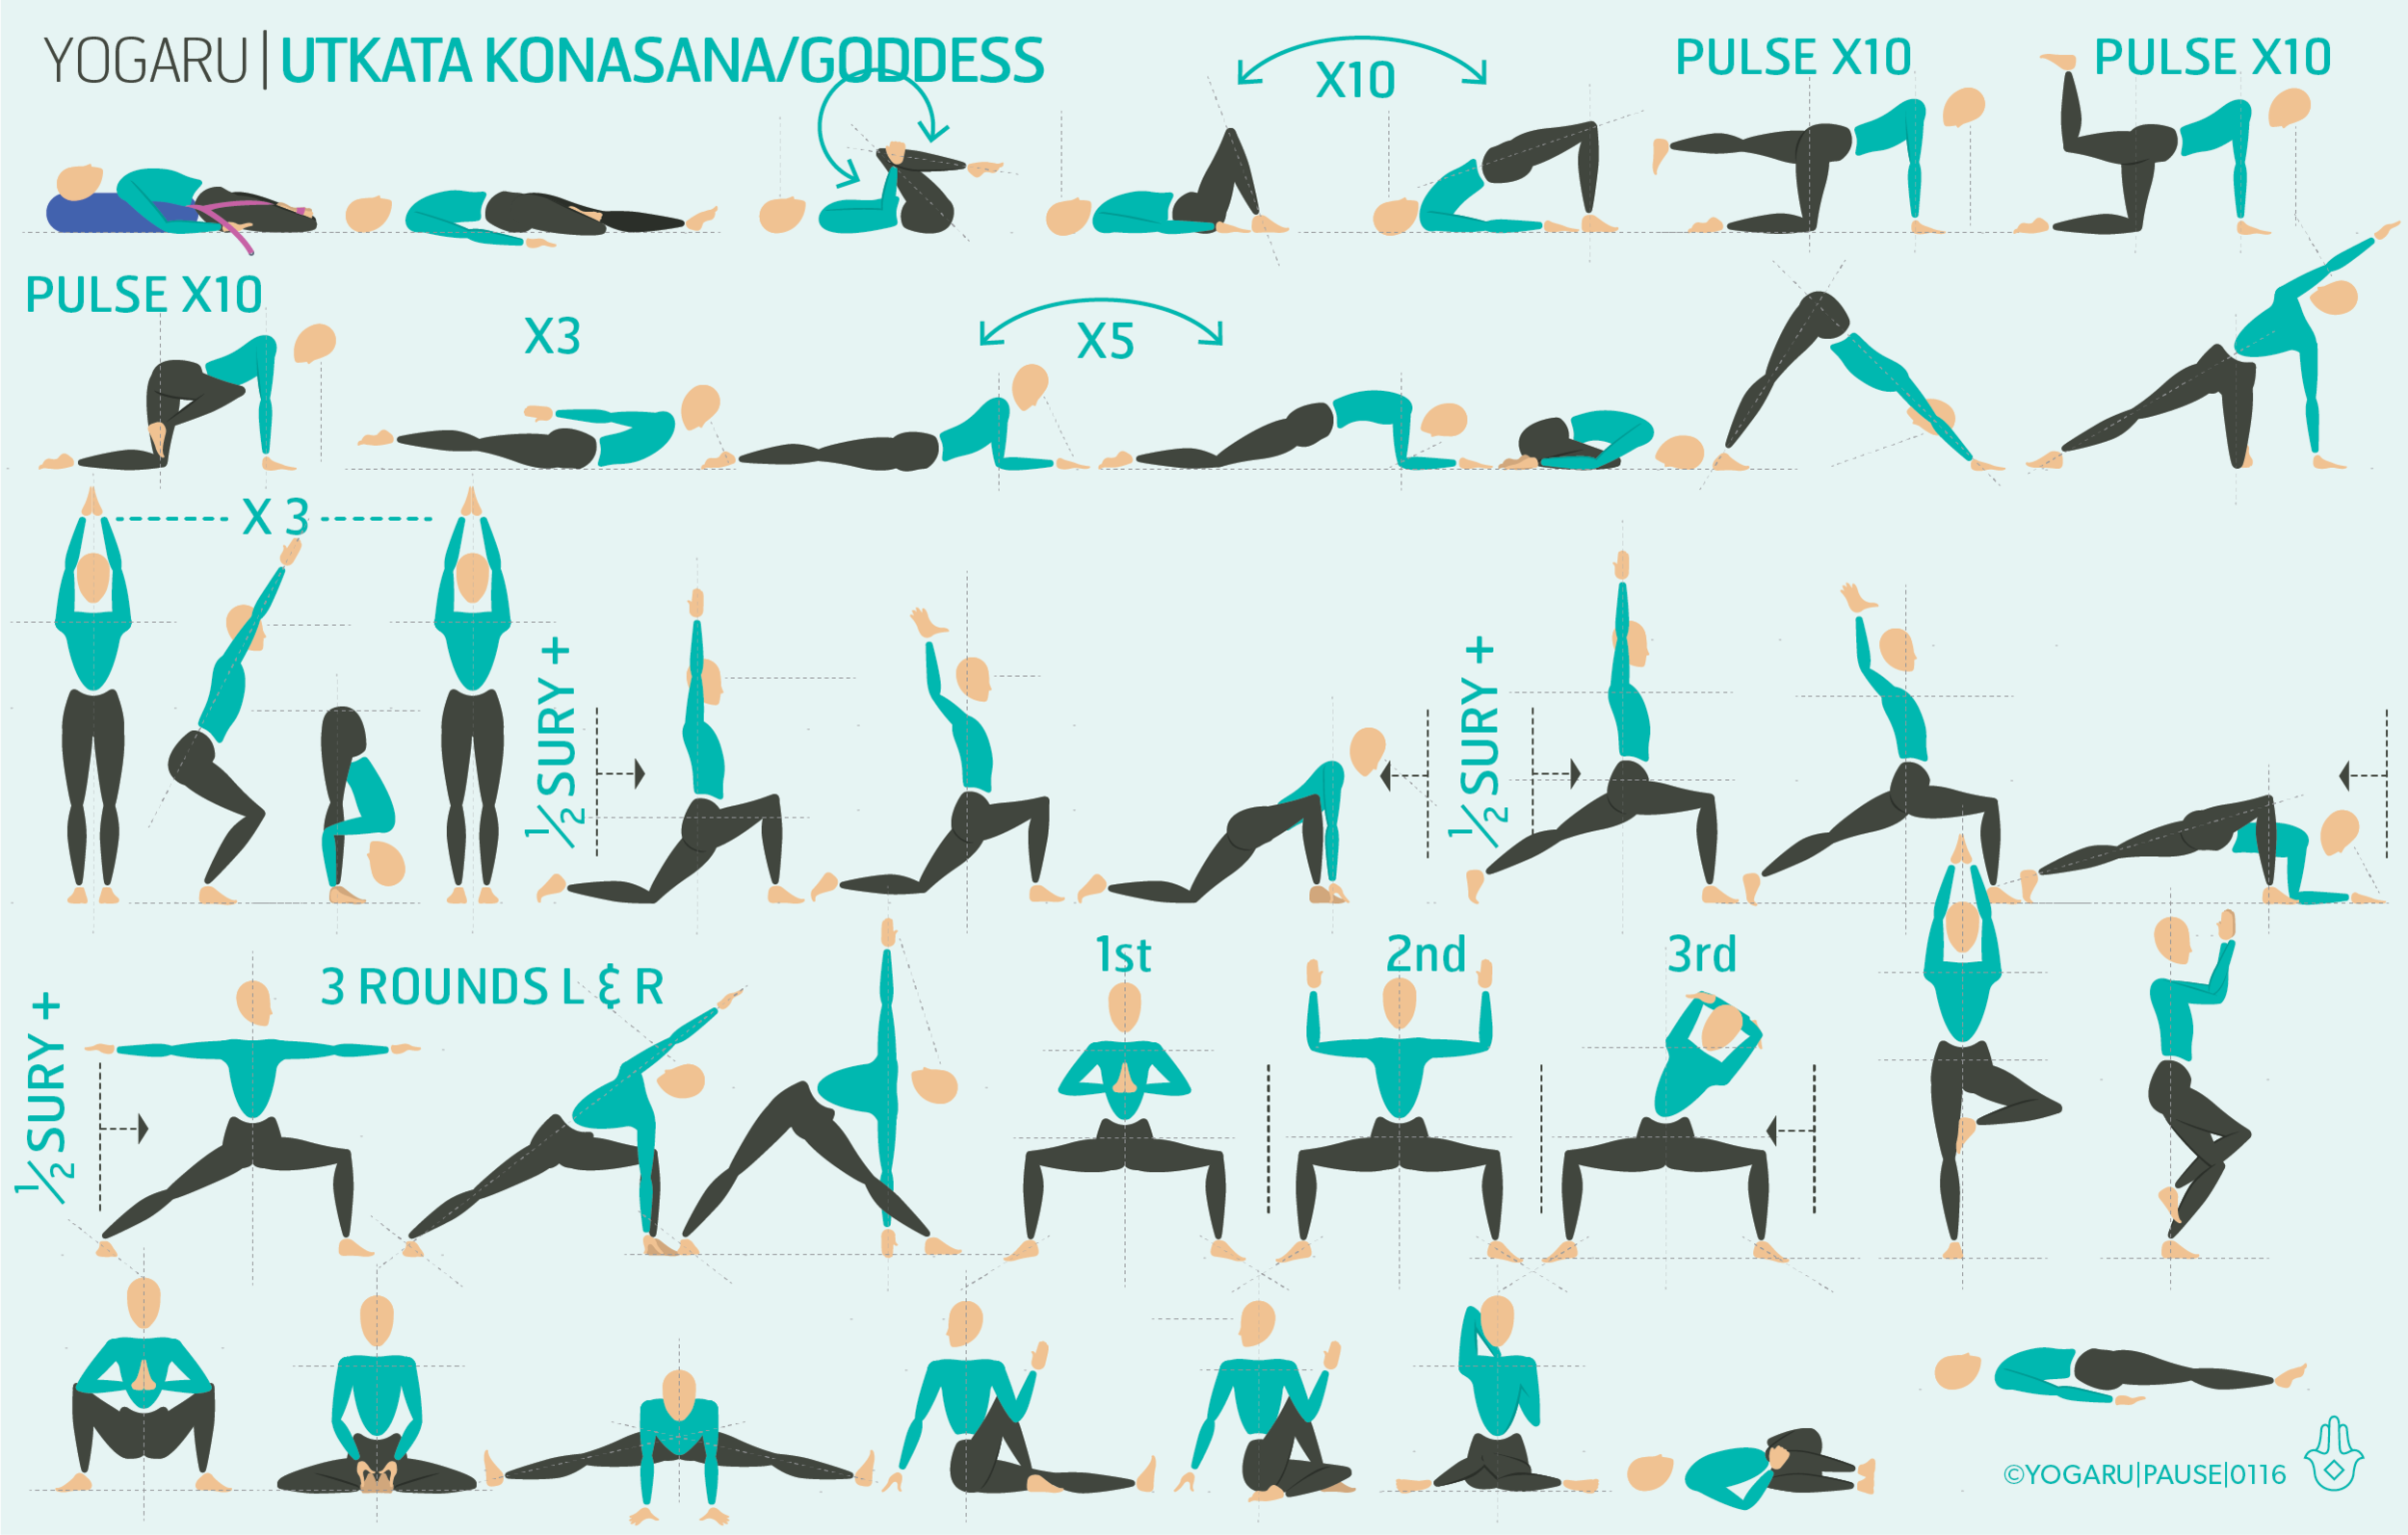 Goddess pose yoga workout. Healthy lifestyle... - Stock Illustration  [74717985] - PIXTA